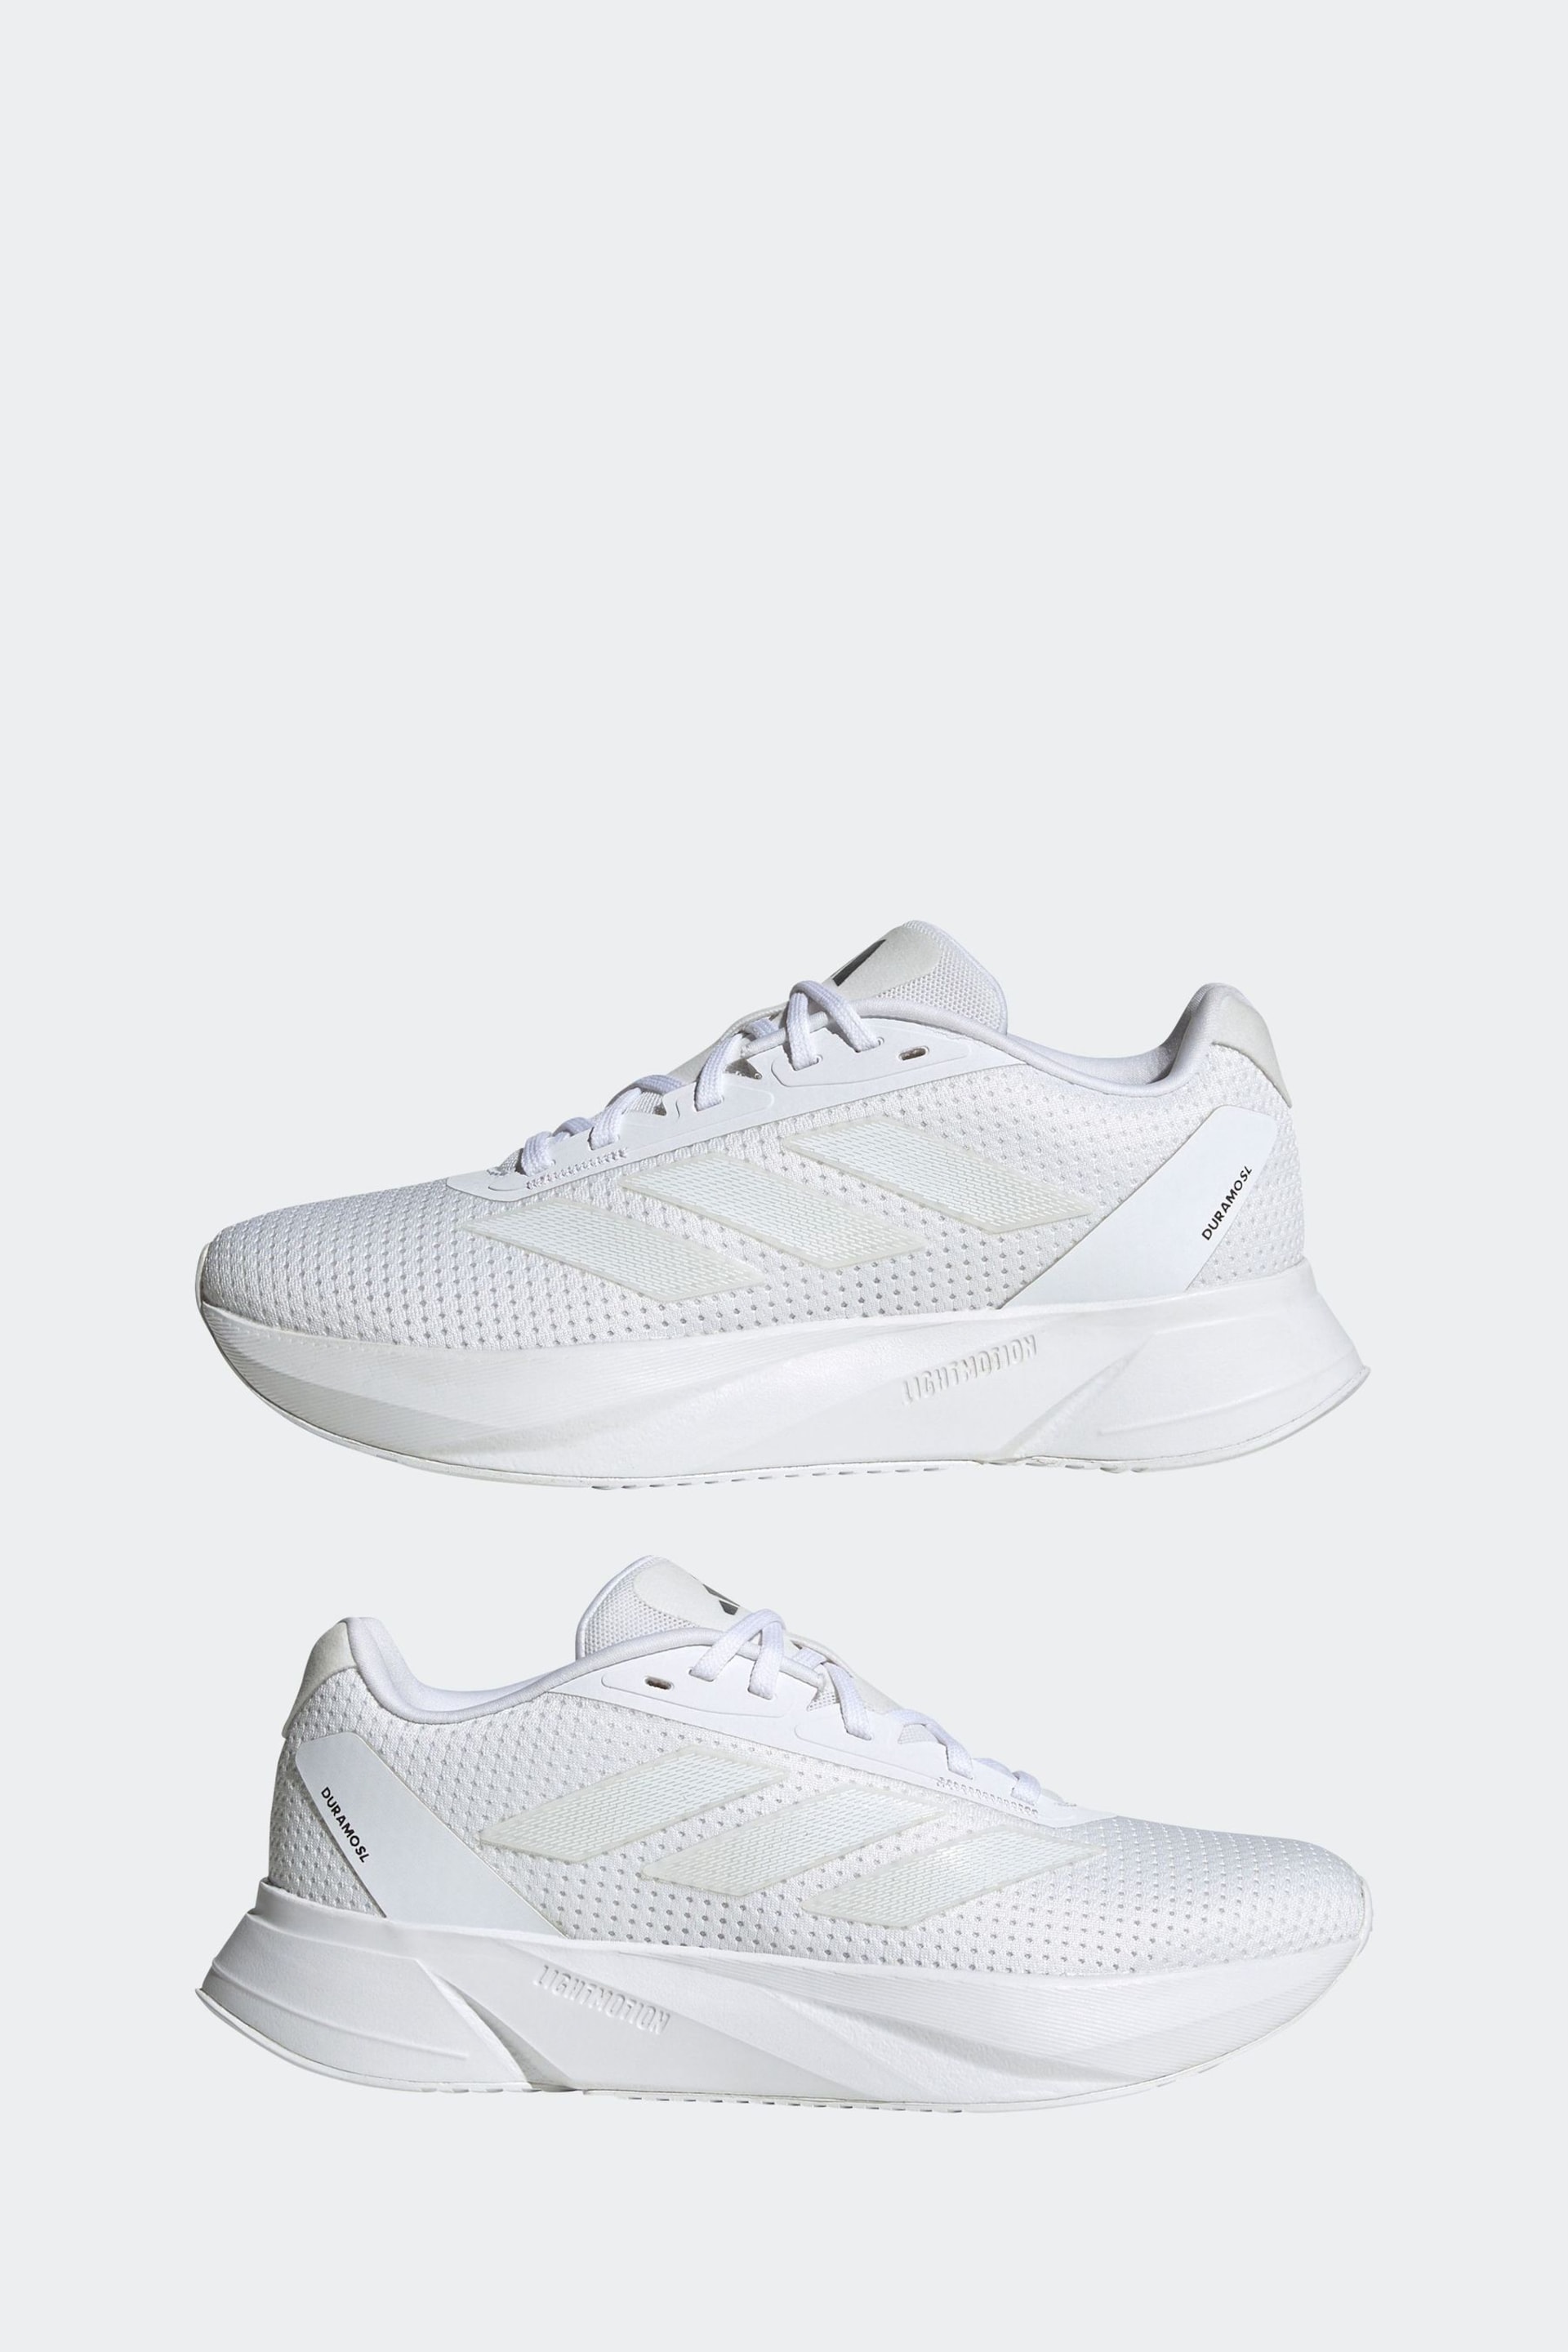 adidas Off White Duramo Running Shoes - Image 6 of 10